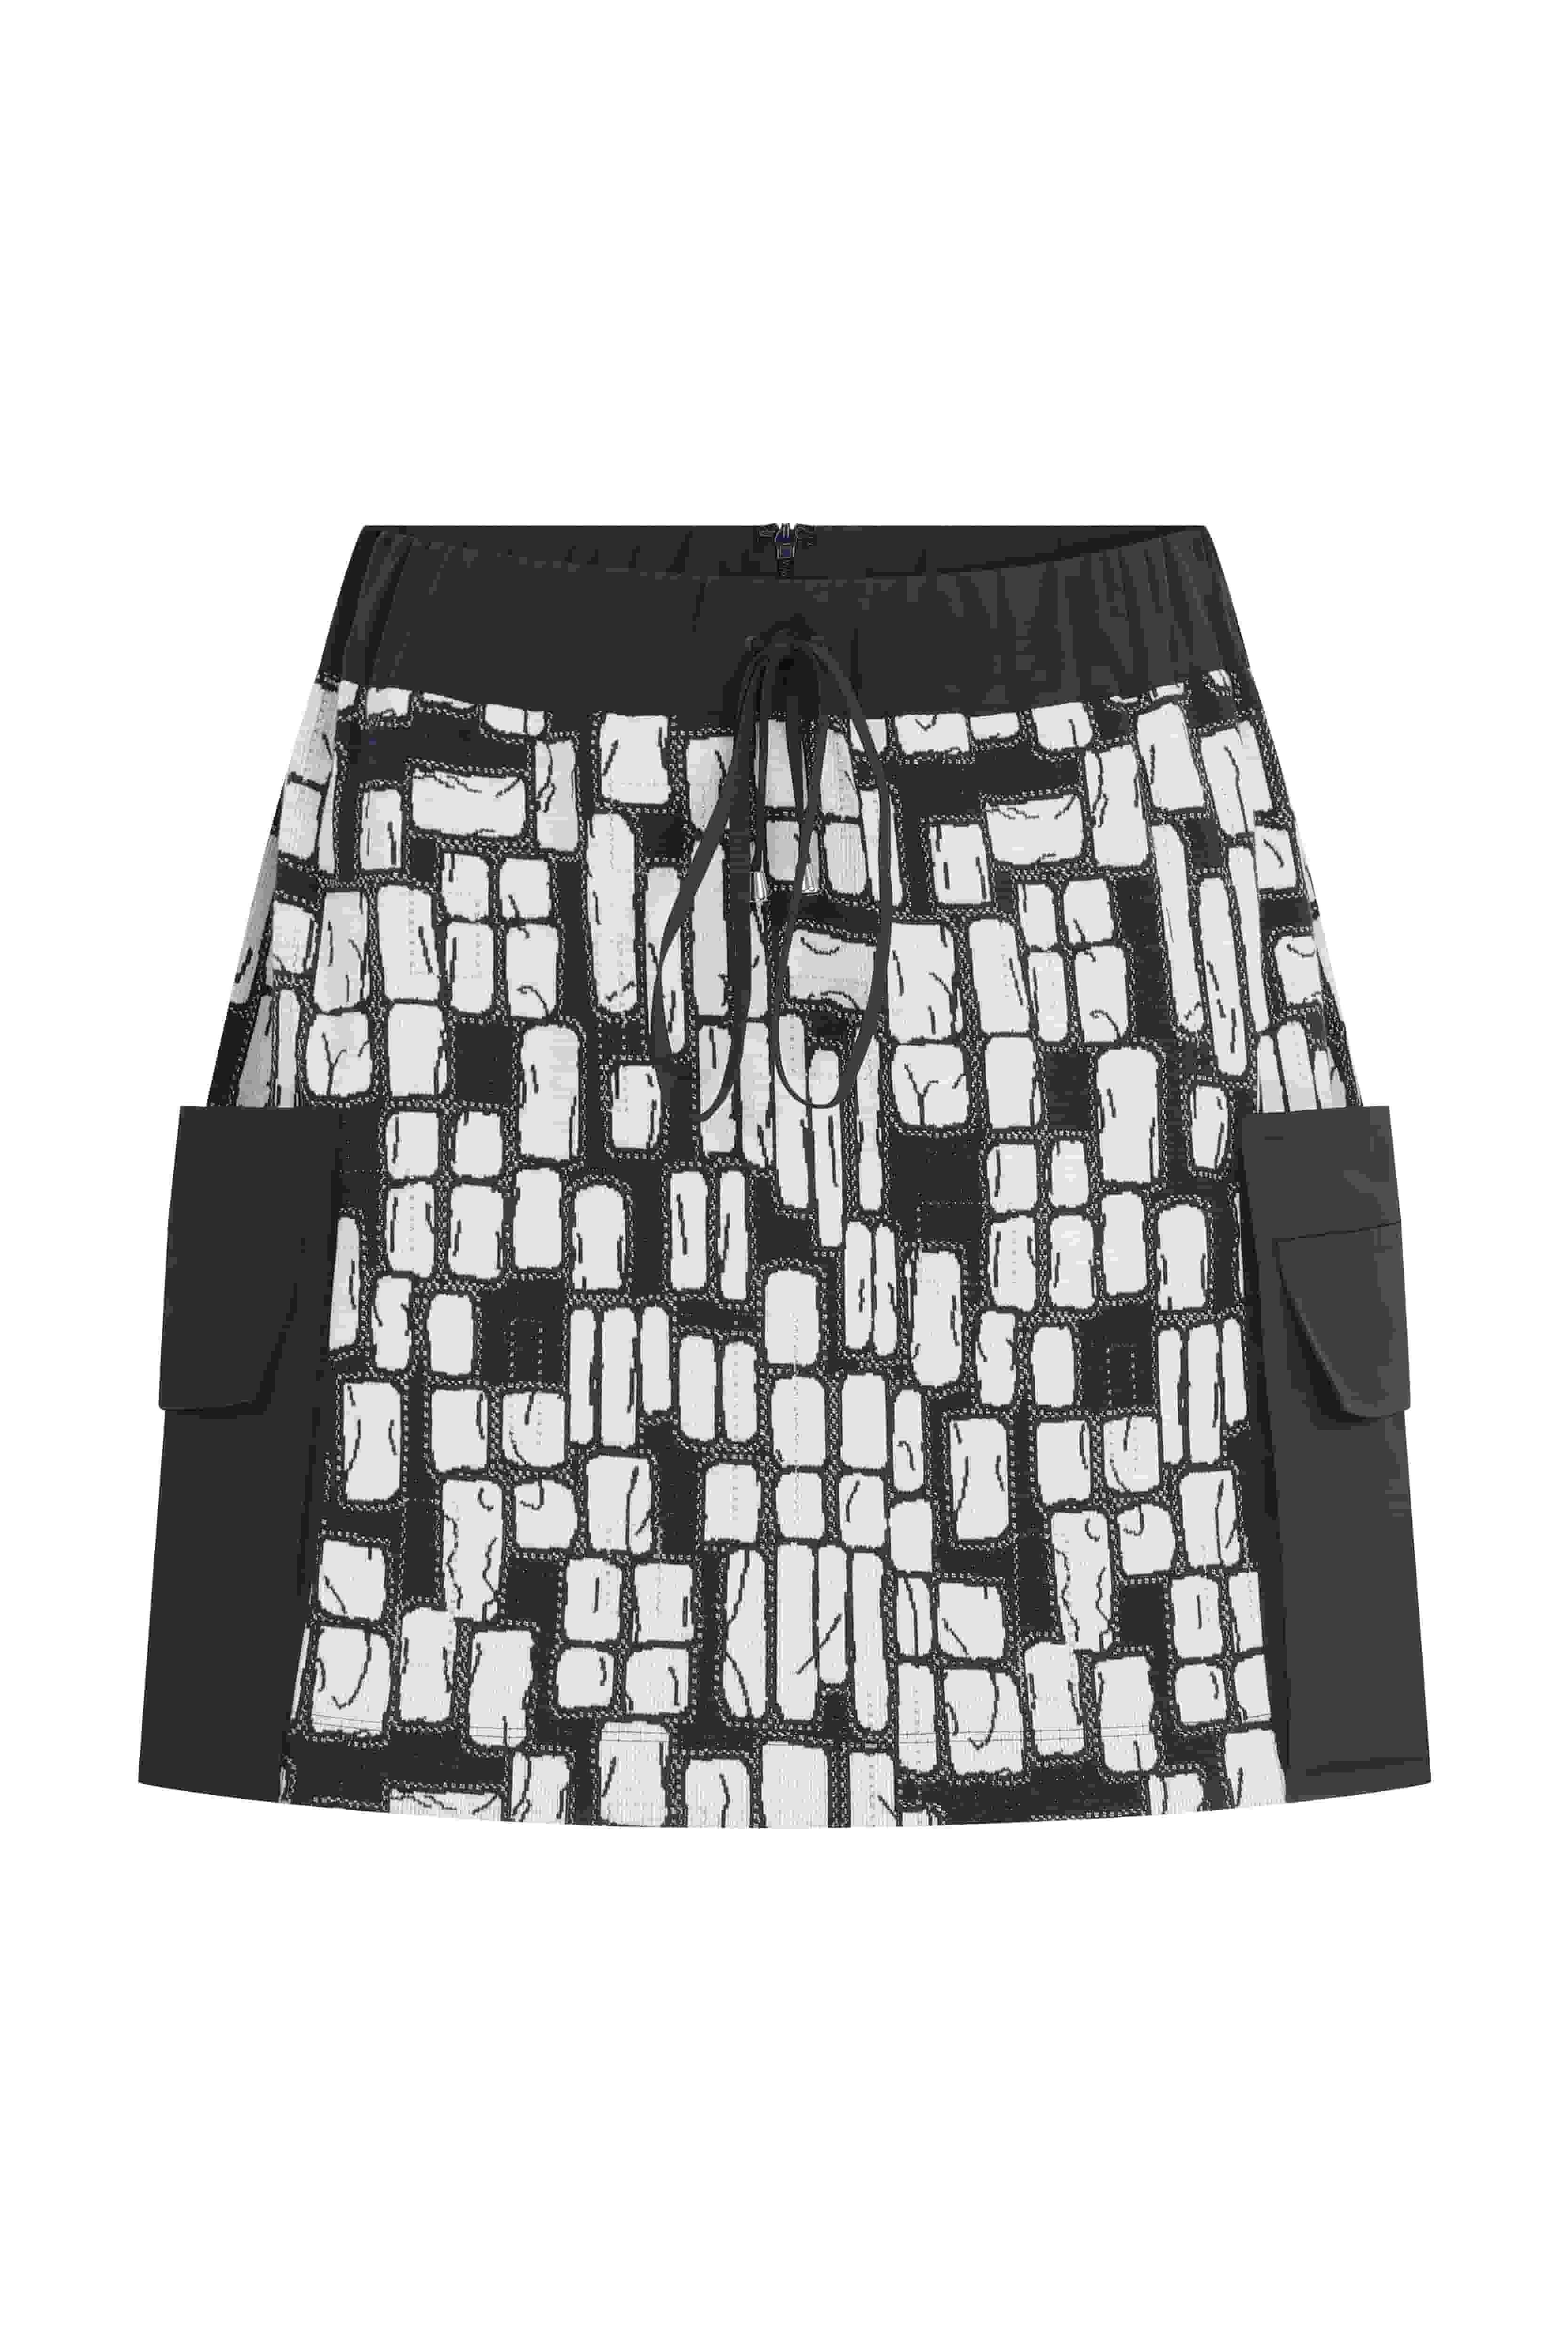 Side Pockets Square Patterned Mini Skirt --[ORIGINAL]